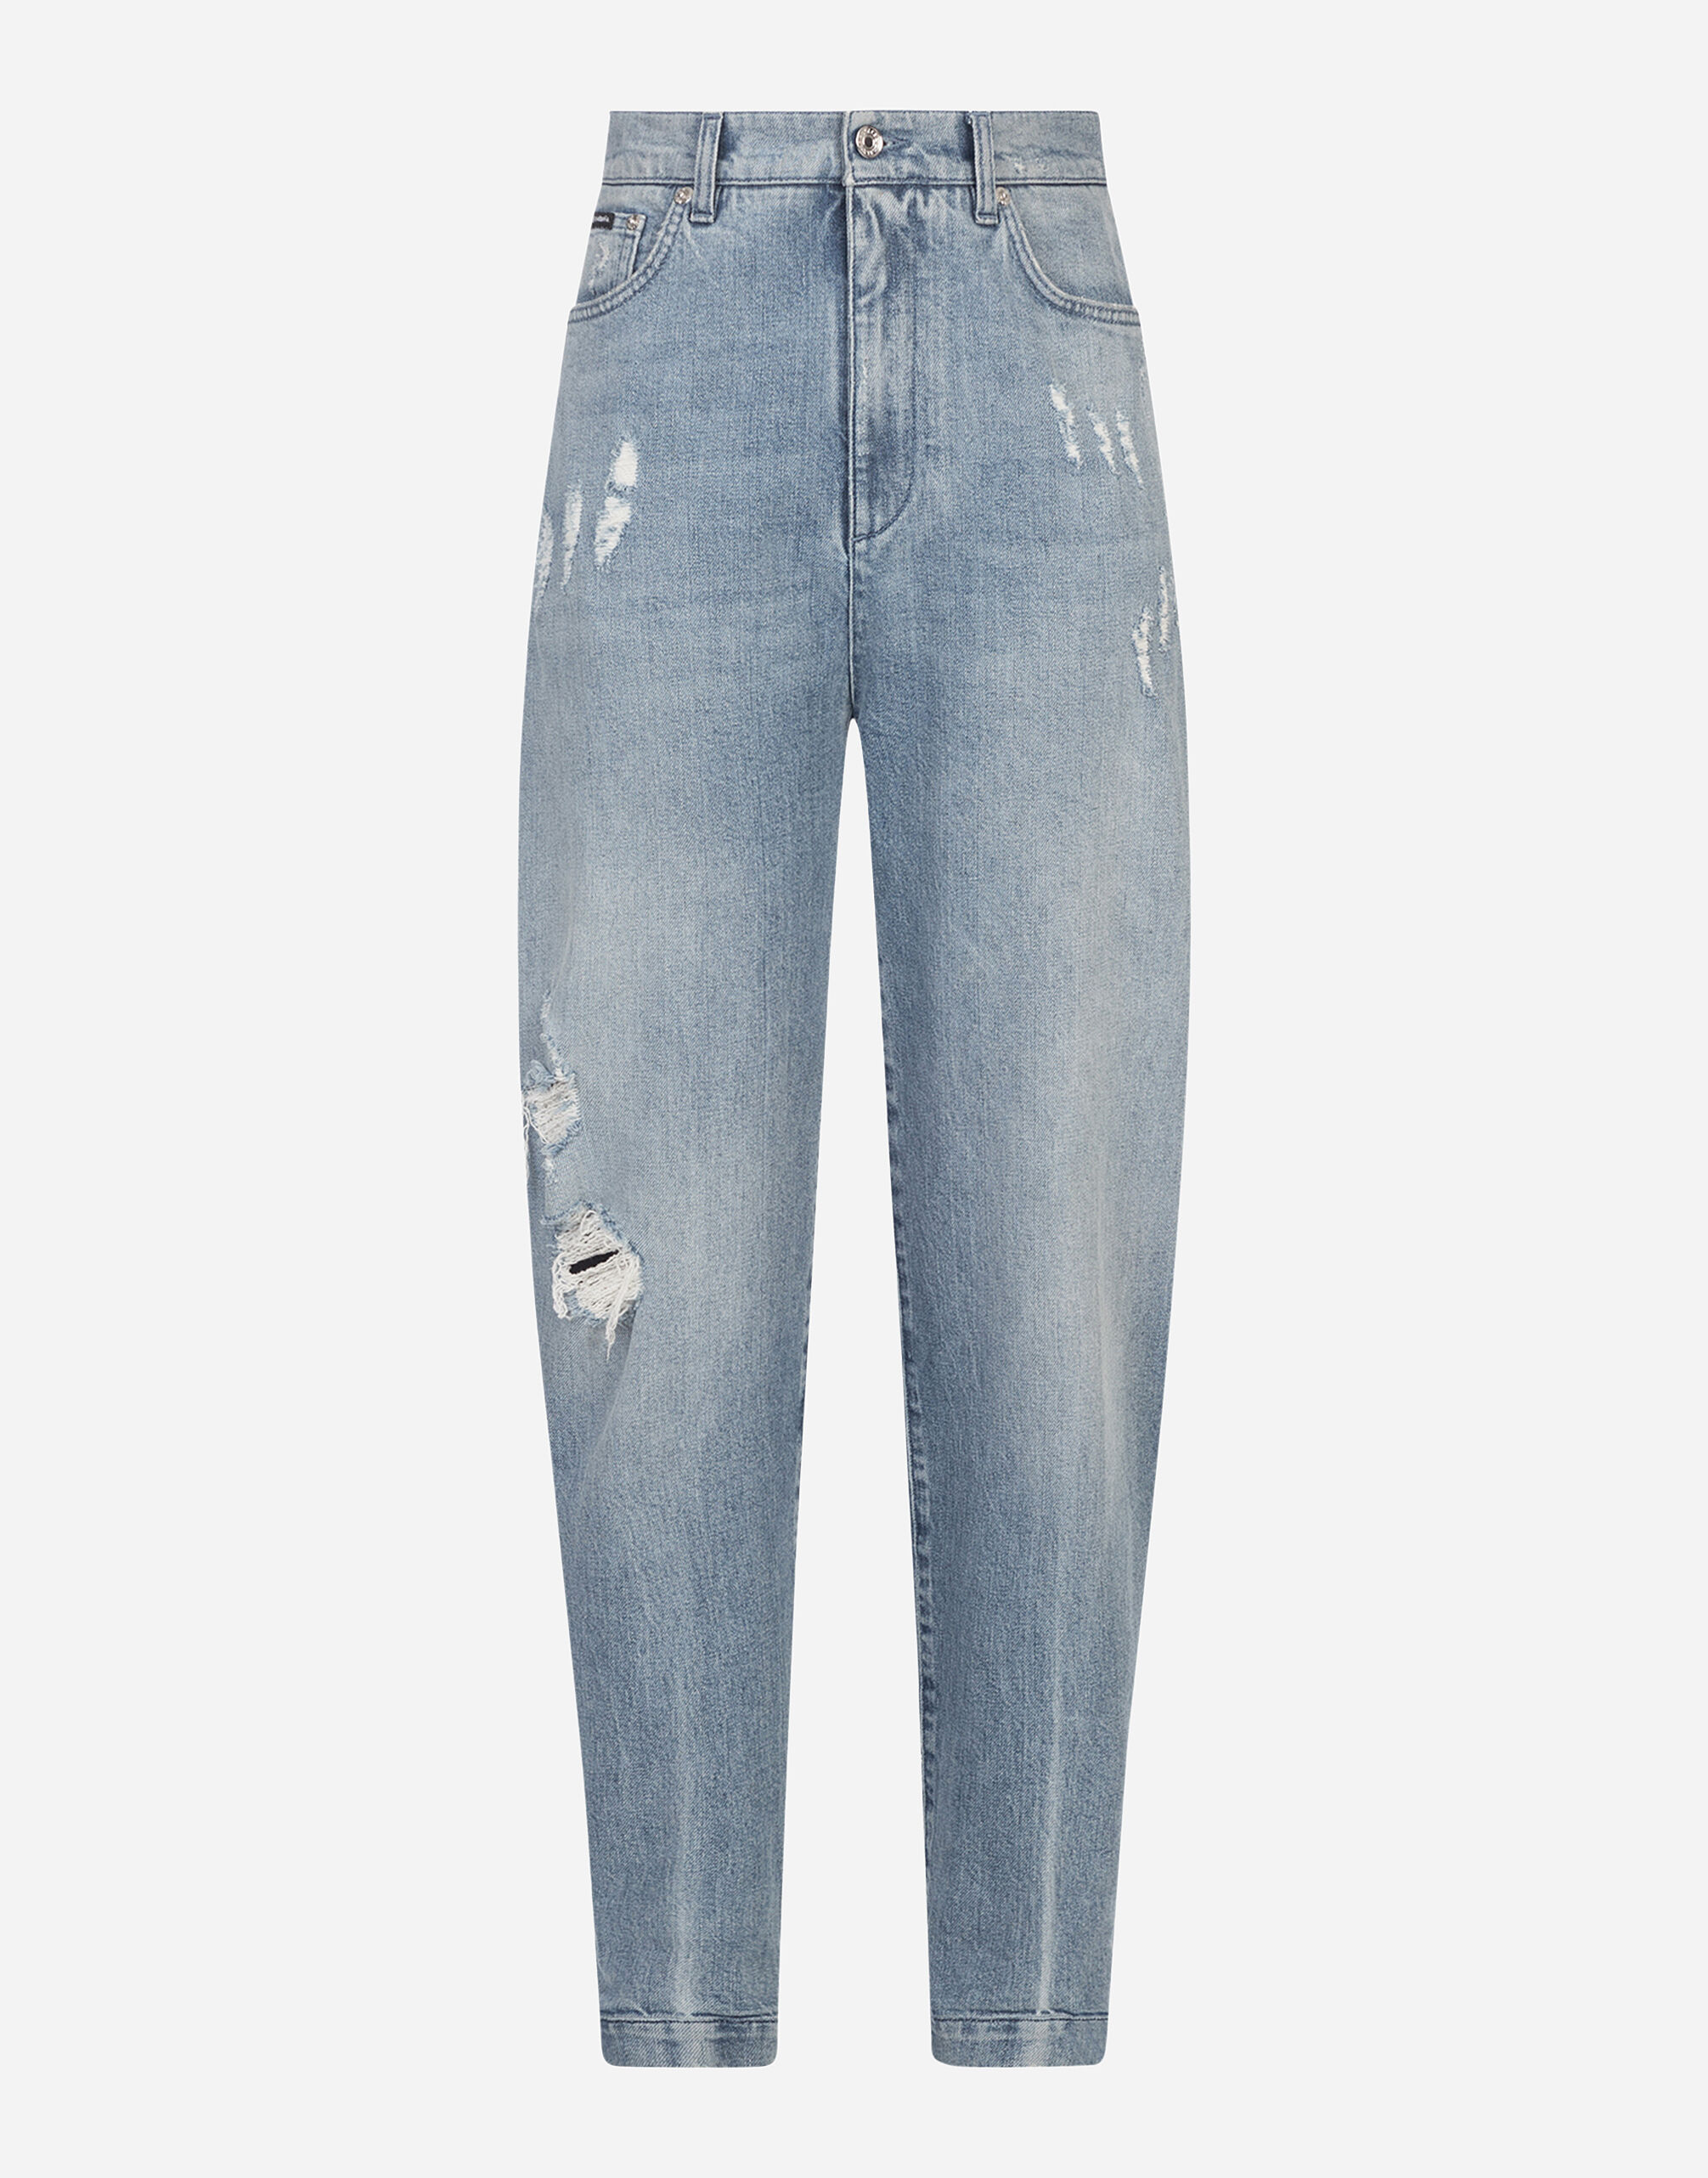 Dolce & Gabbana Boyfriend jeans in light blue denim with rips Silver BI1416AW121